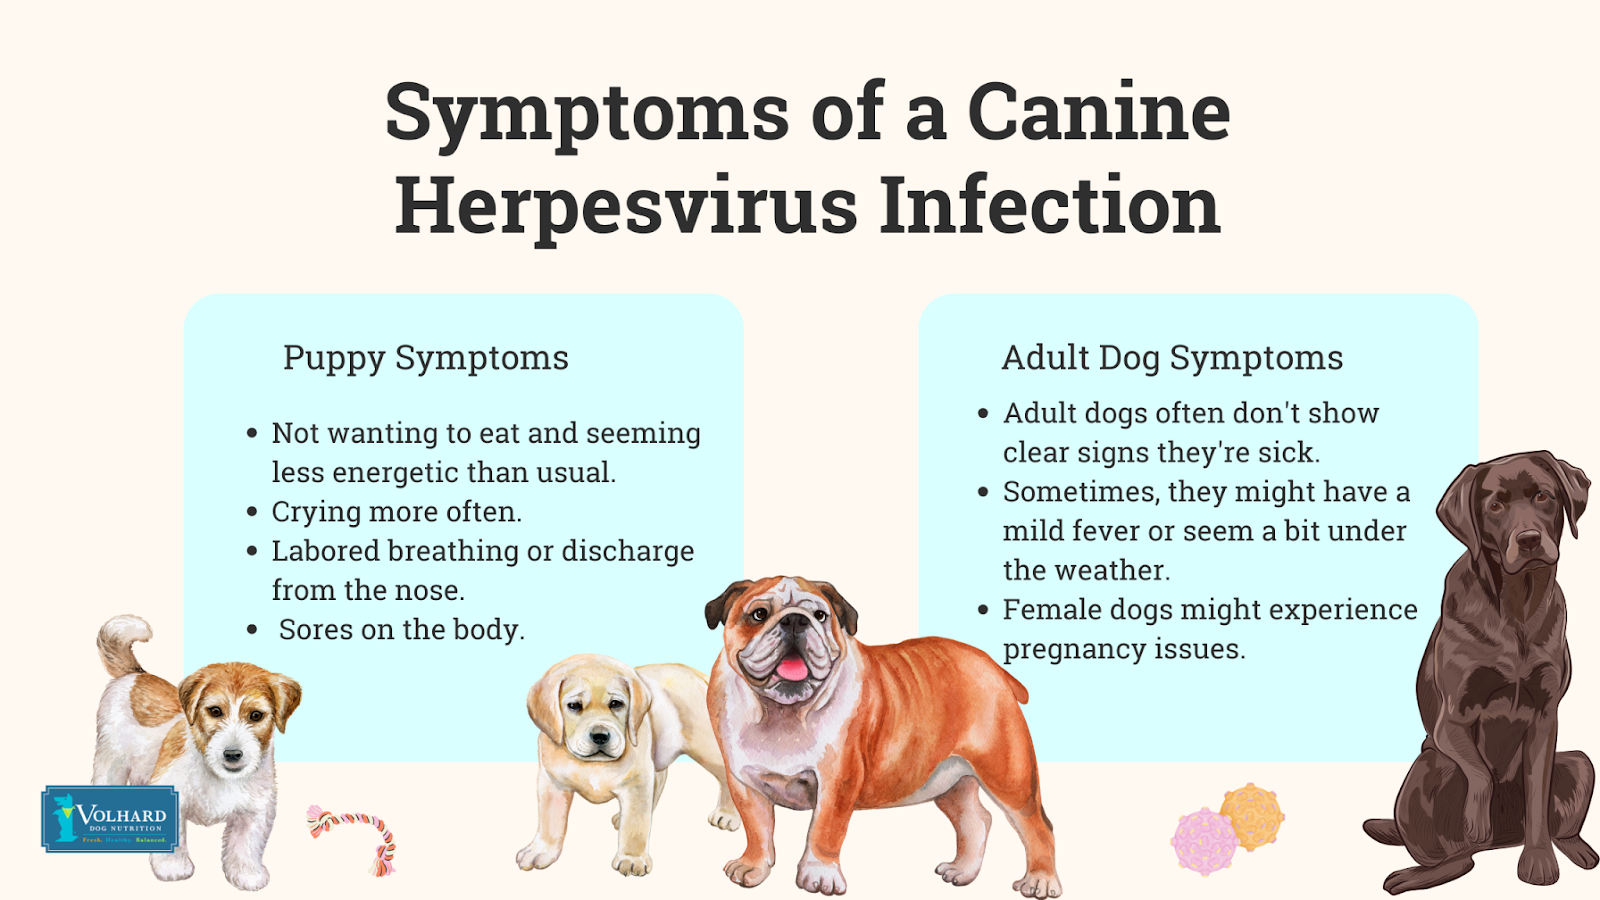 Symptoms of canine herpesvirus infection